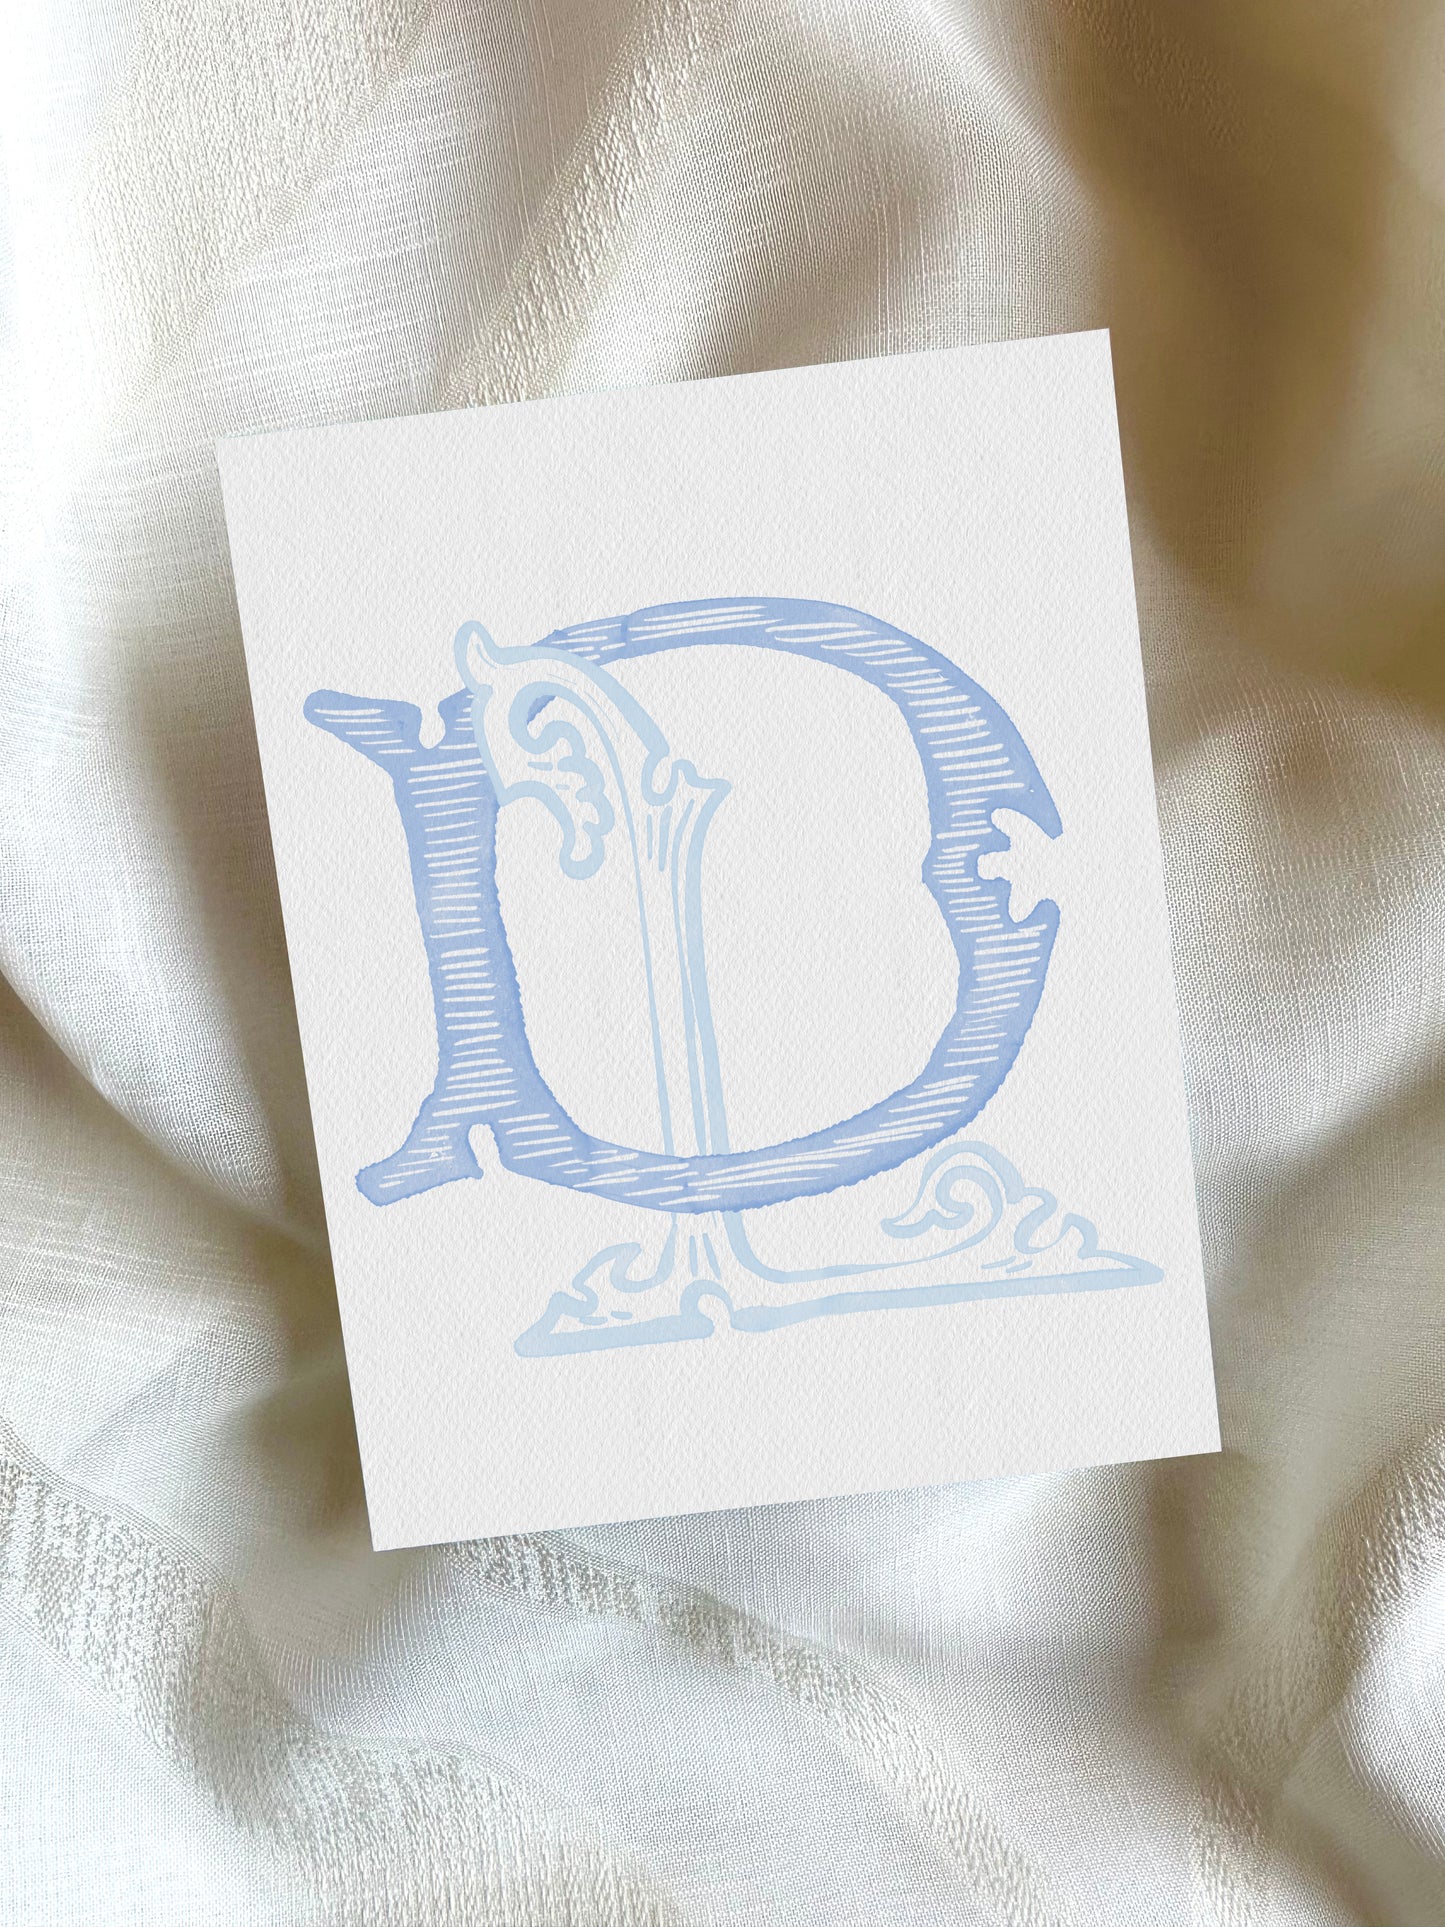 2 Letter Monogram with Letters DL LD | Digital Download - Wedding Monogram SVG, Personal Logo, Wedding Logo for Wedding Invitations The Wedding Crest Lab